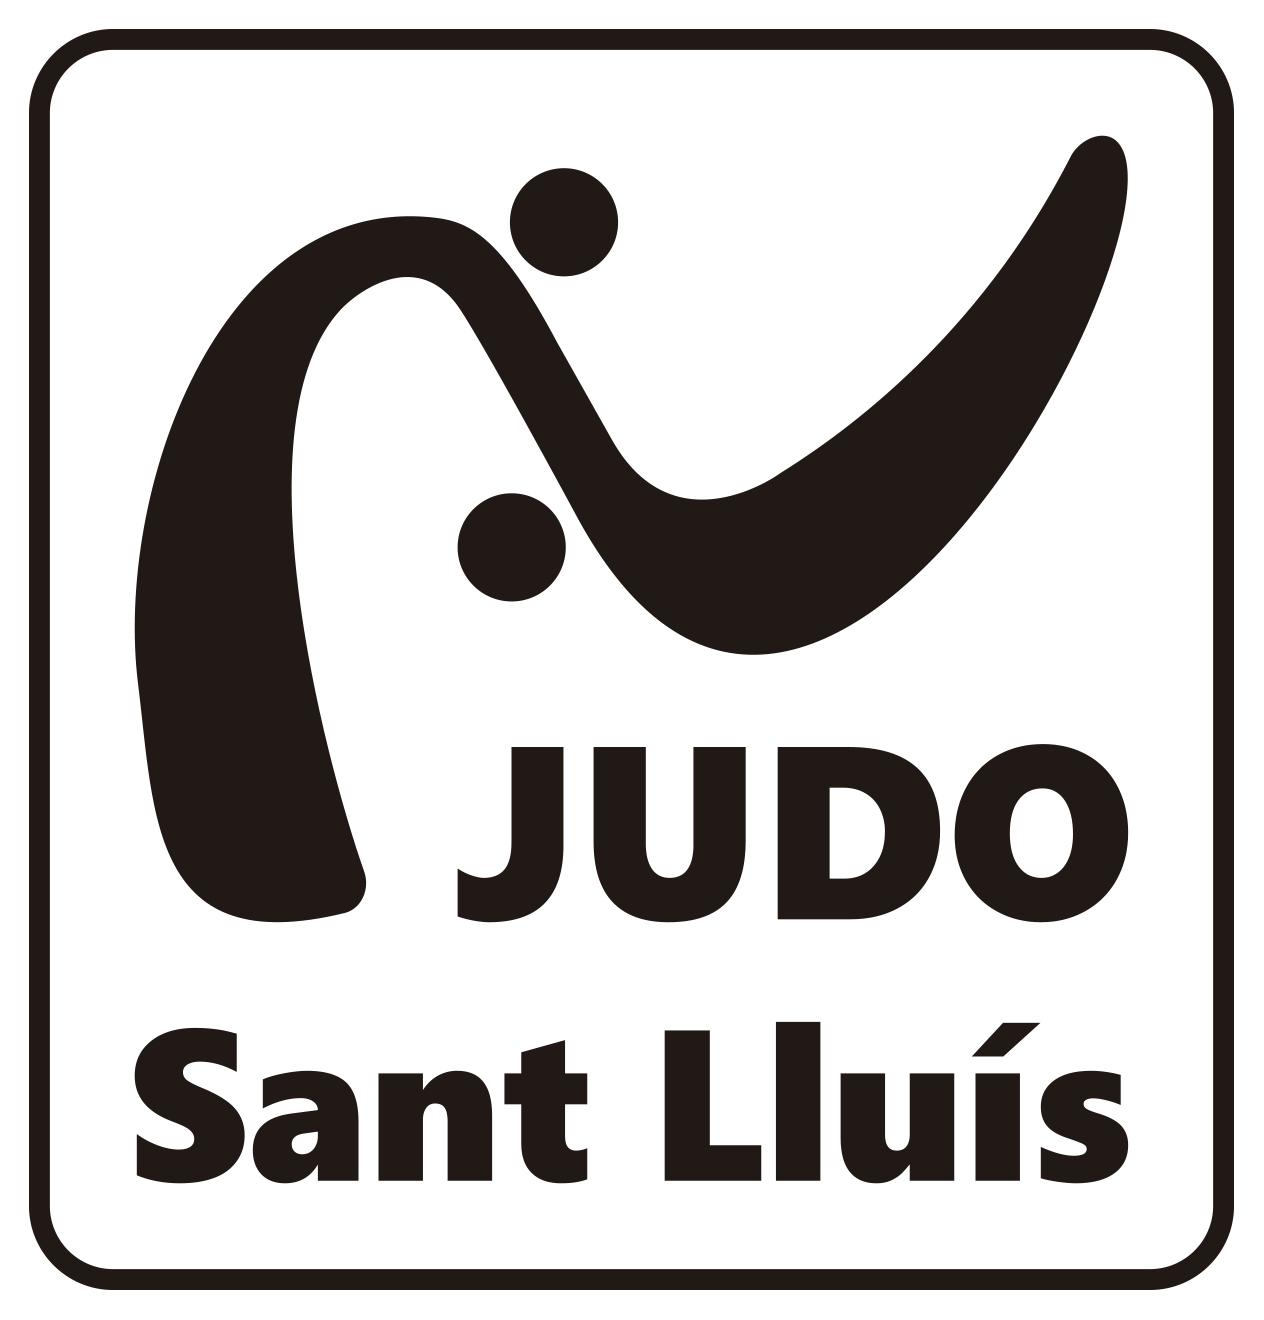 Judo Sant Lluís